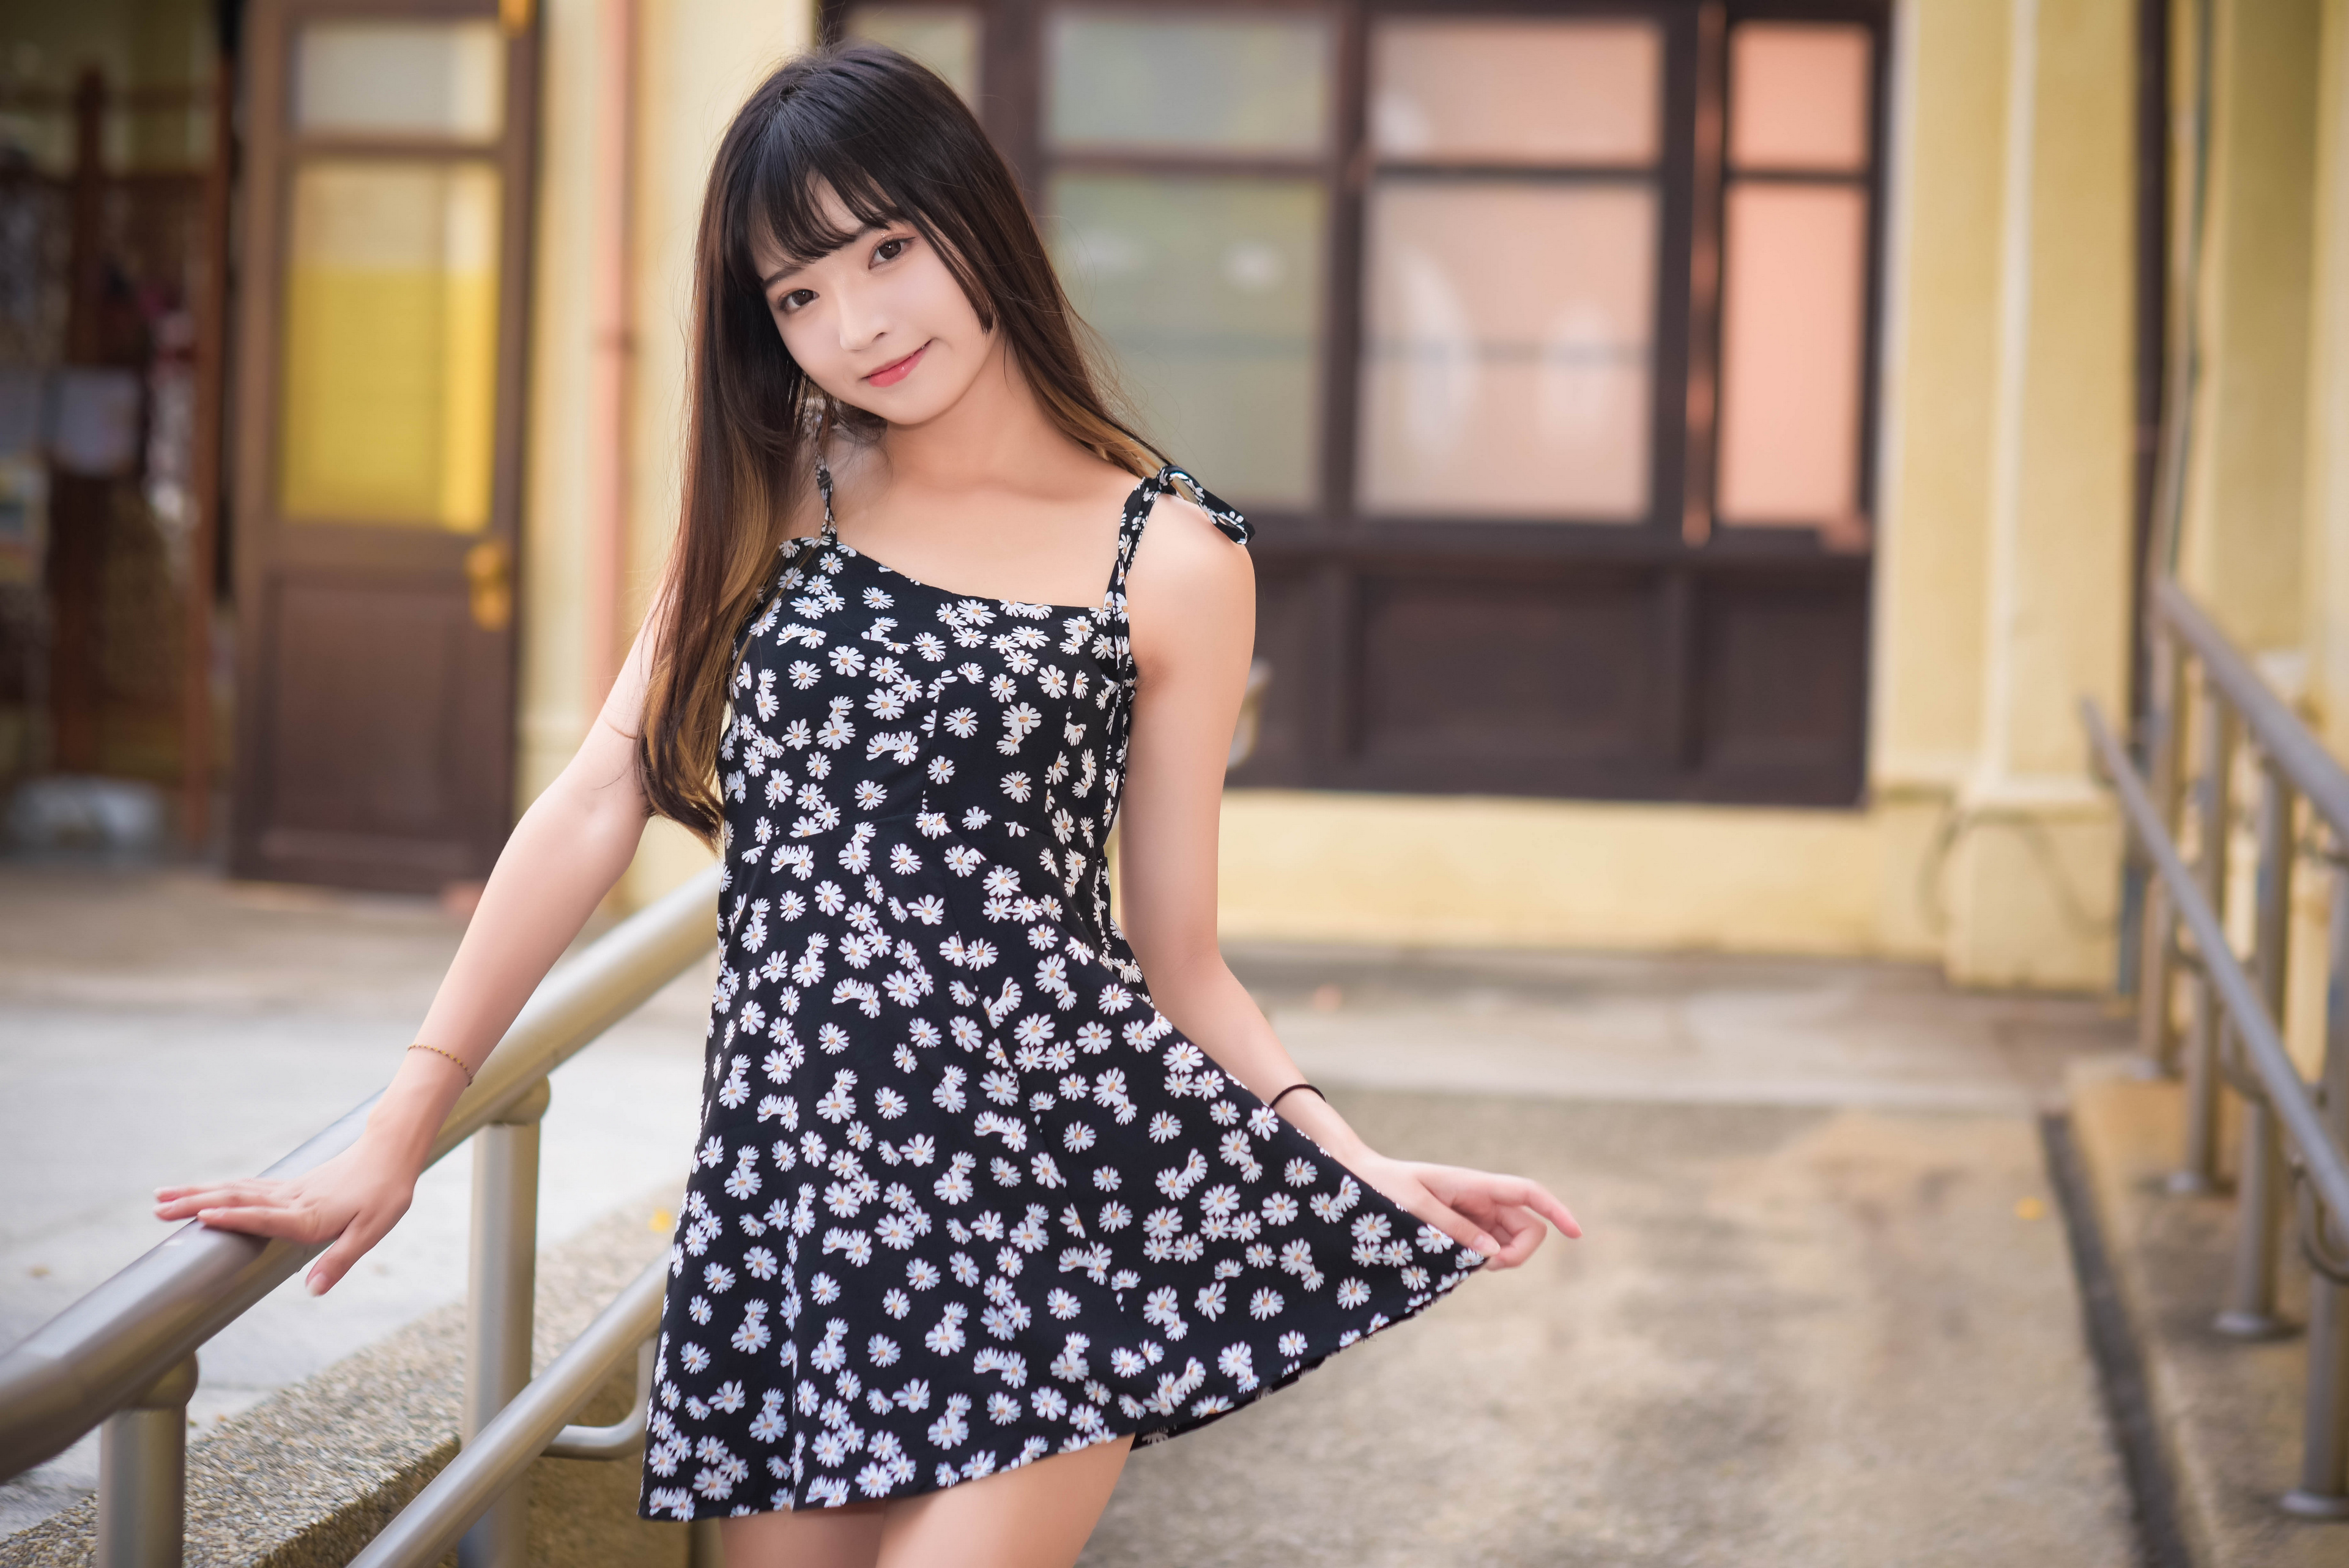 Asian Model Women Long Hair Dark Hair Flower Dress Iron Railing 3840x2563